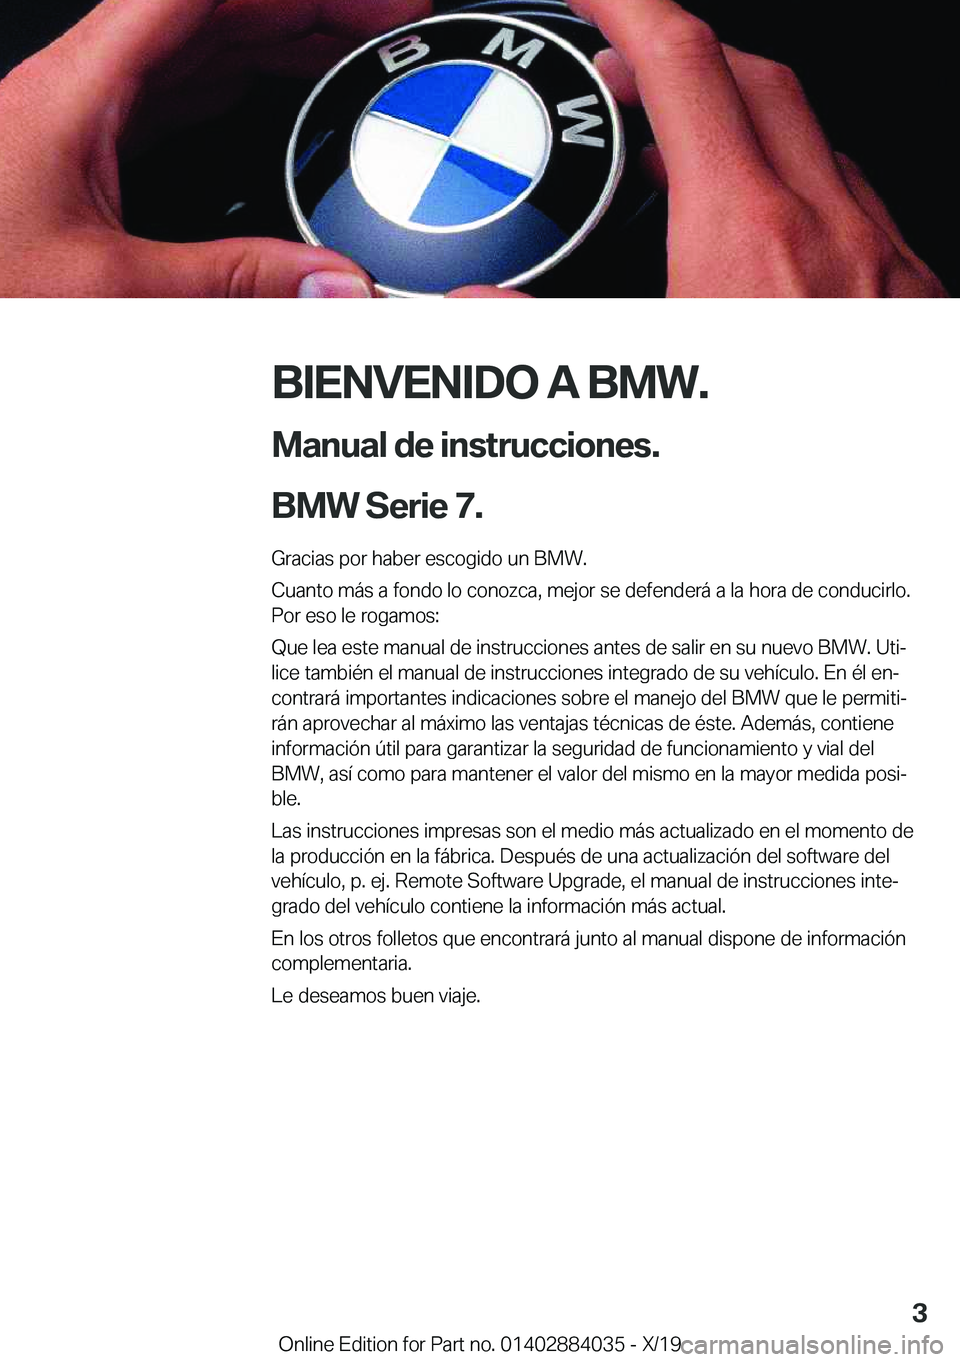 BMW 7 SERIES 2020  Manuales de Empleo (in Spanish) �B�I�E�N�V�E�N�I�D�O��A��B�M�W�.
�M�a�n�u�a�l��d�e��i�n�s�t�r�u�c�c�i�o�n�e�s�.
�B�M�W��S�e�r�i�e��7�. �G�r�a�c�i�a�s��p�o�r��h�a�b�e�r��e�s�c�o�g�i�d�o��u�n��B�M�W�.
�C�u�a�n�t�o��m�